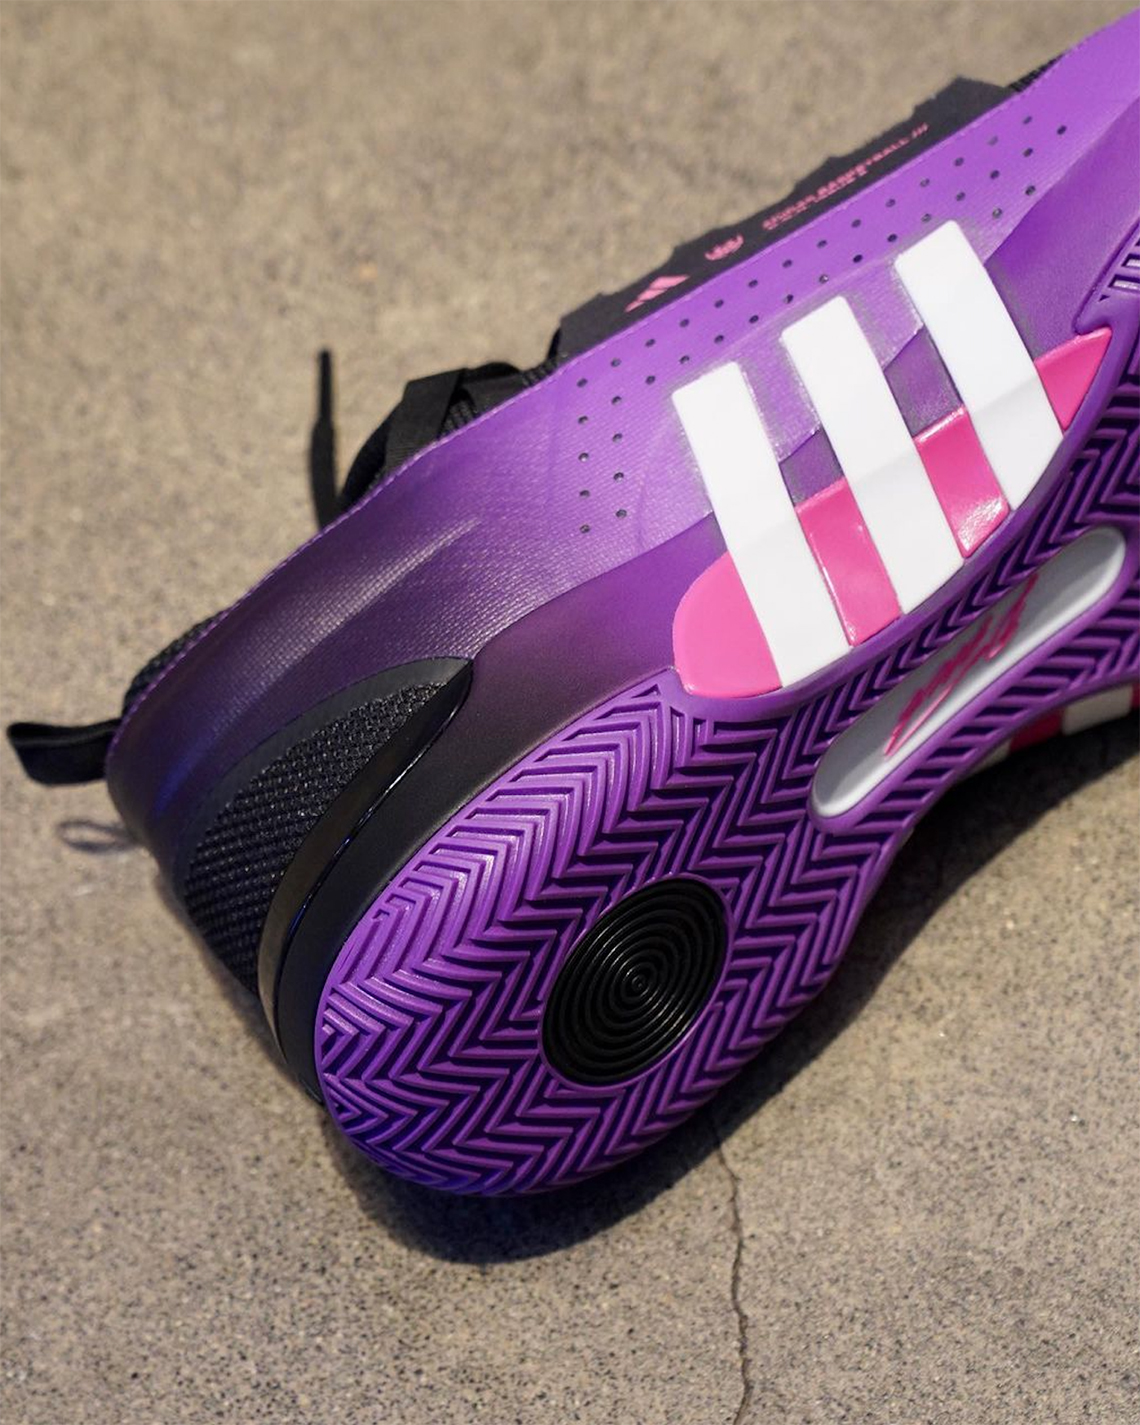 adidas don issue 5 purple black pink 5